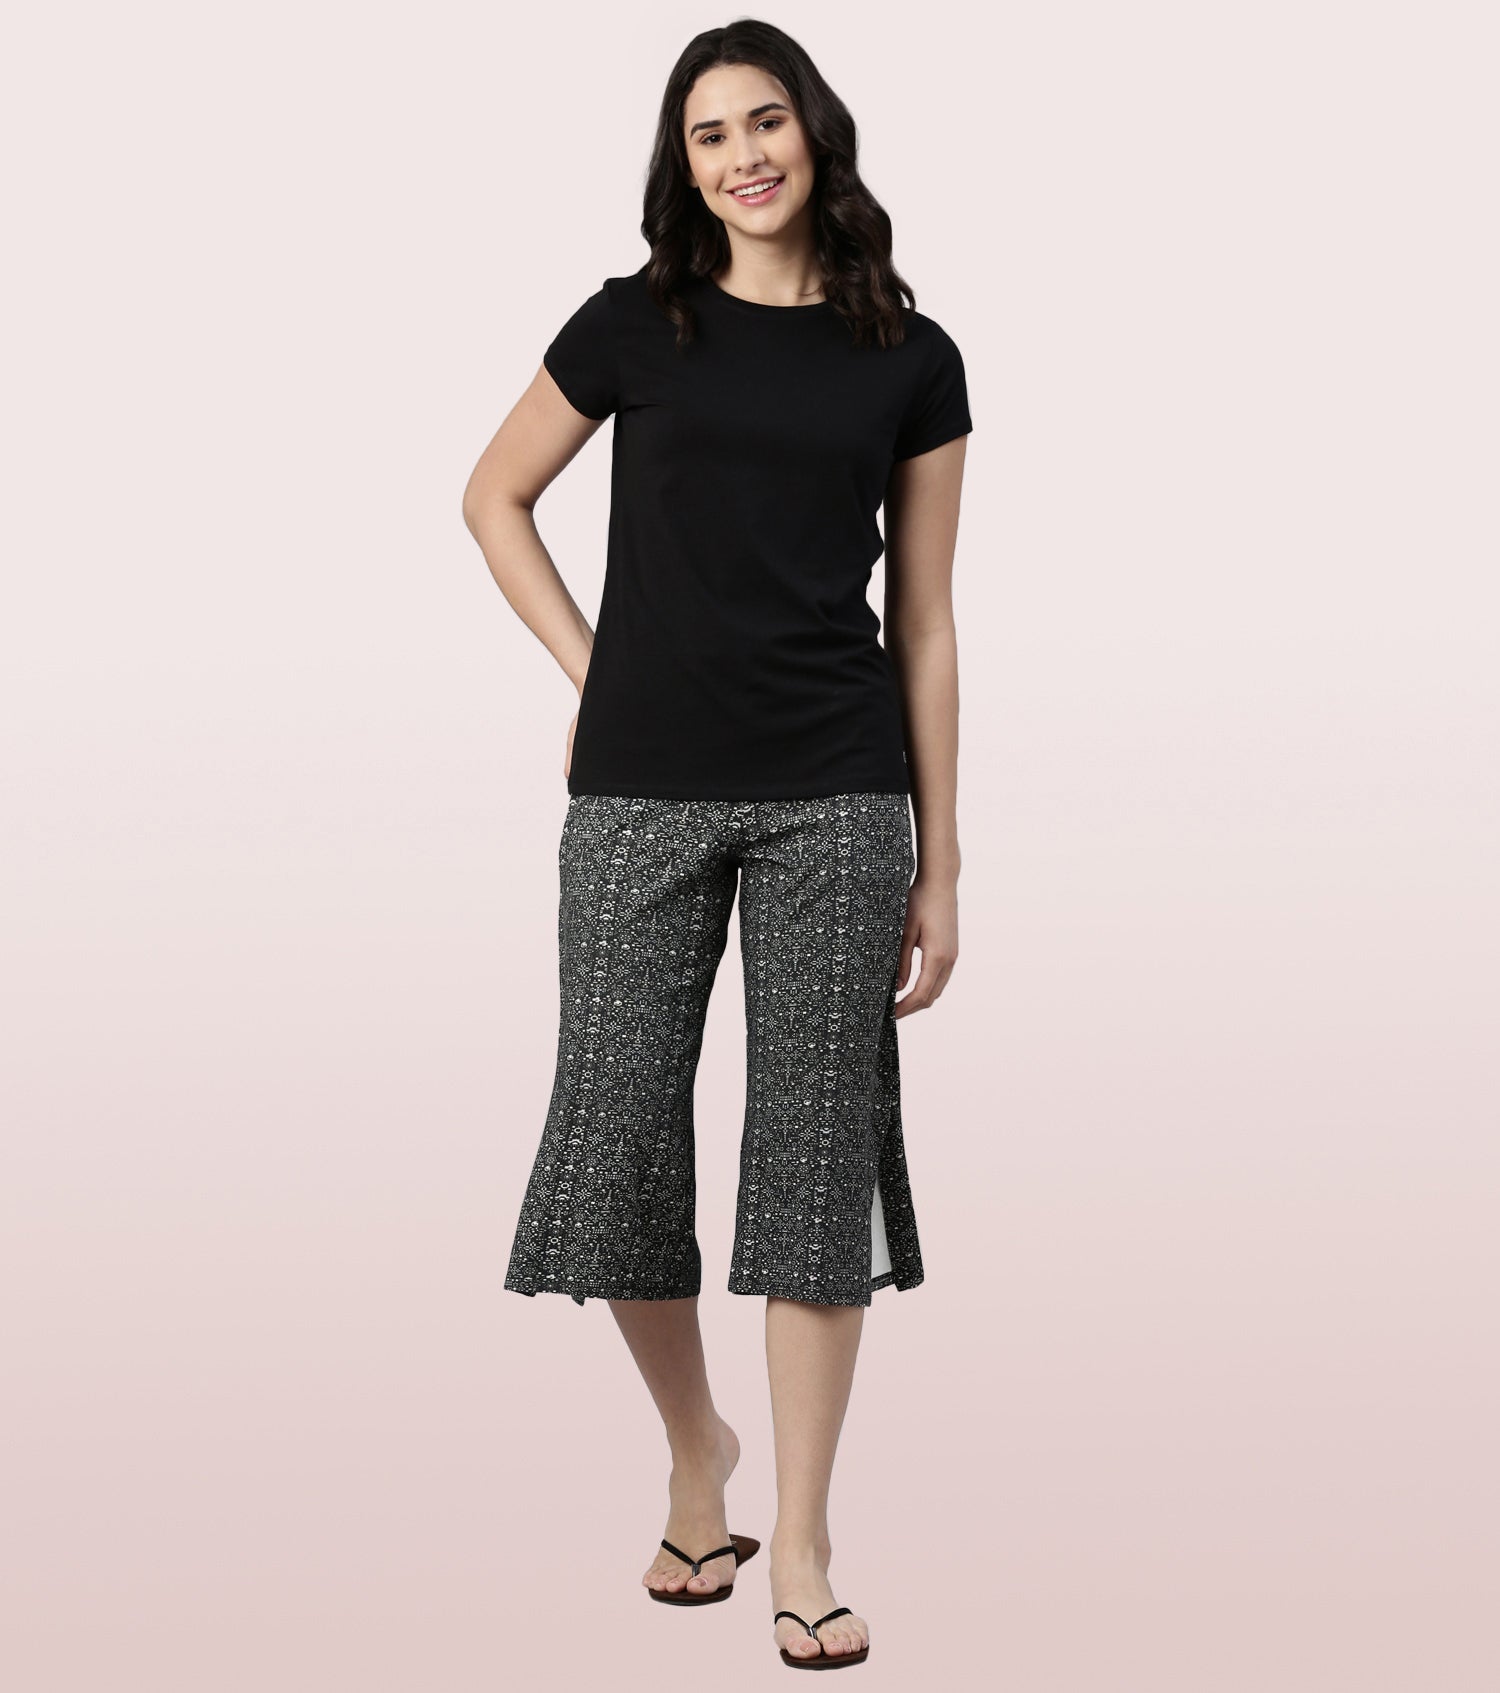 Enamor Culotte Pants For Women | Crop Length Culottes With Smart Side Slits | Black Pixie Aop